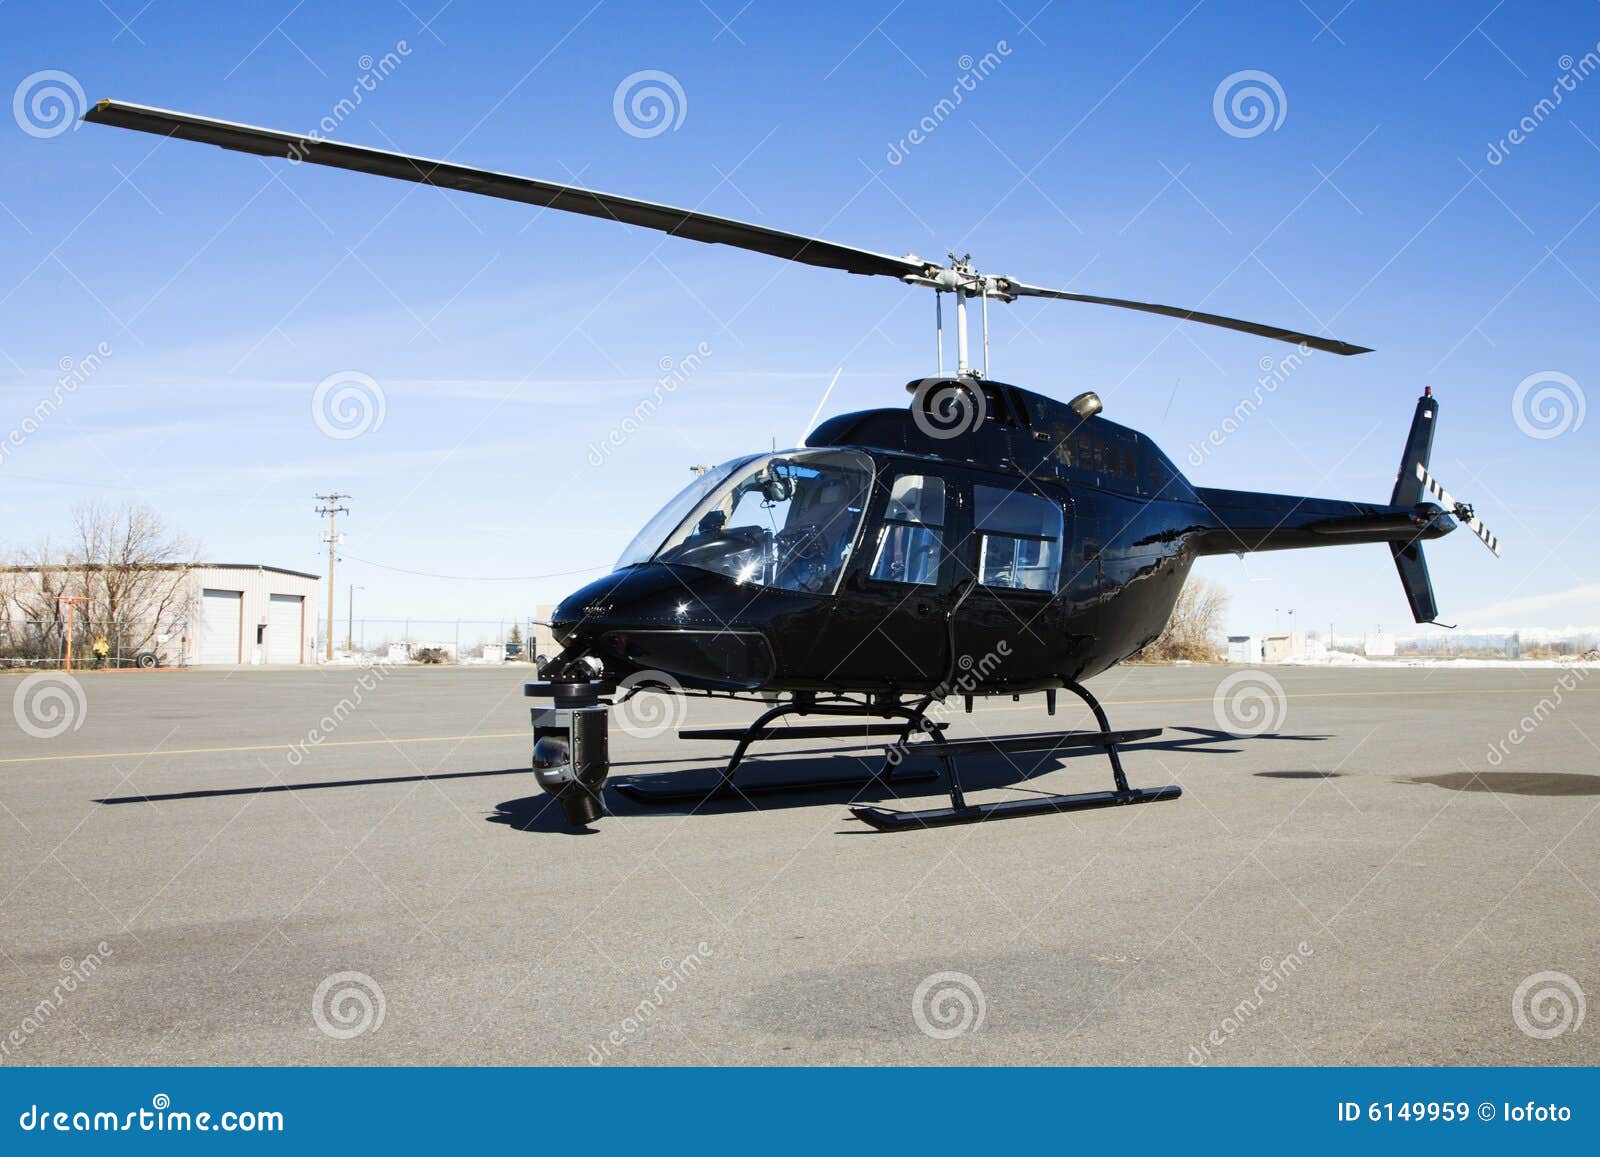 Un San Valentín inolvidable (Lexie +18) - Página 3 Helicopter-parked-airport-lot-6149959